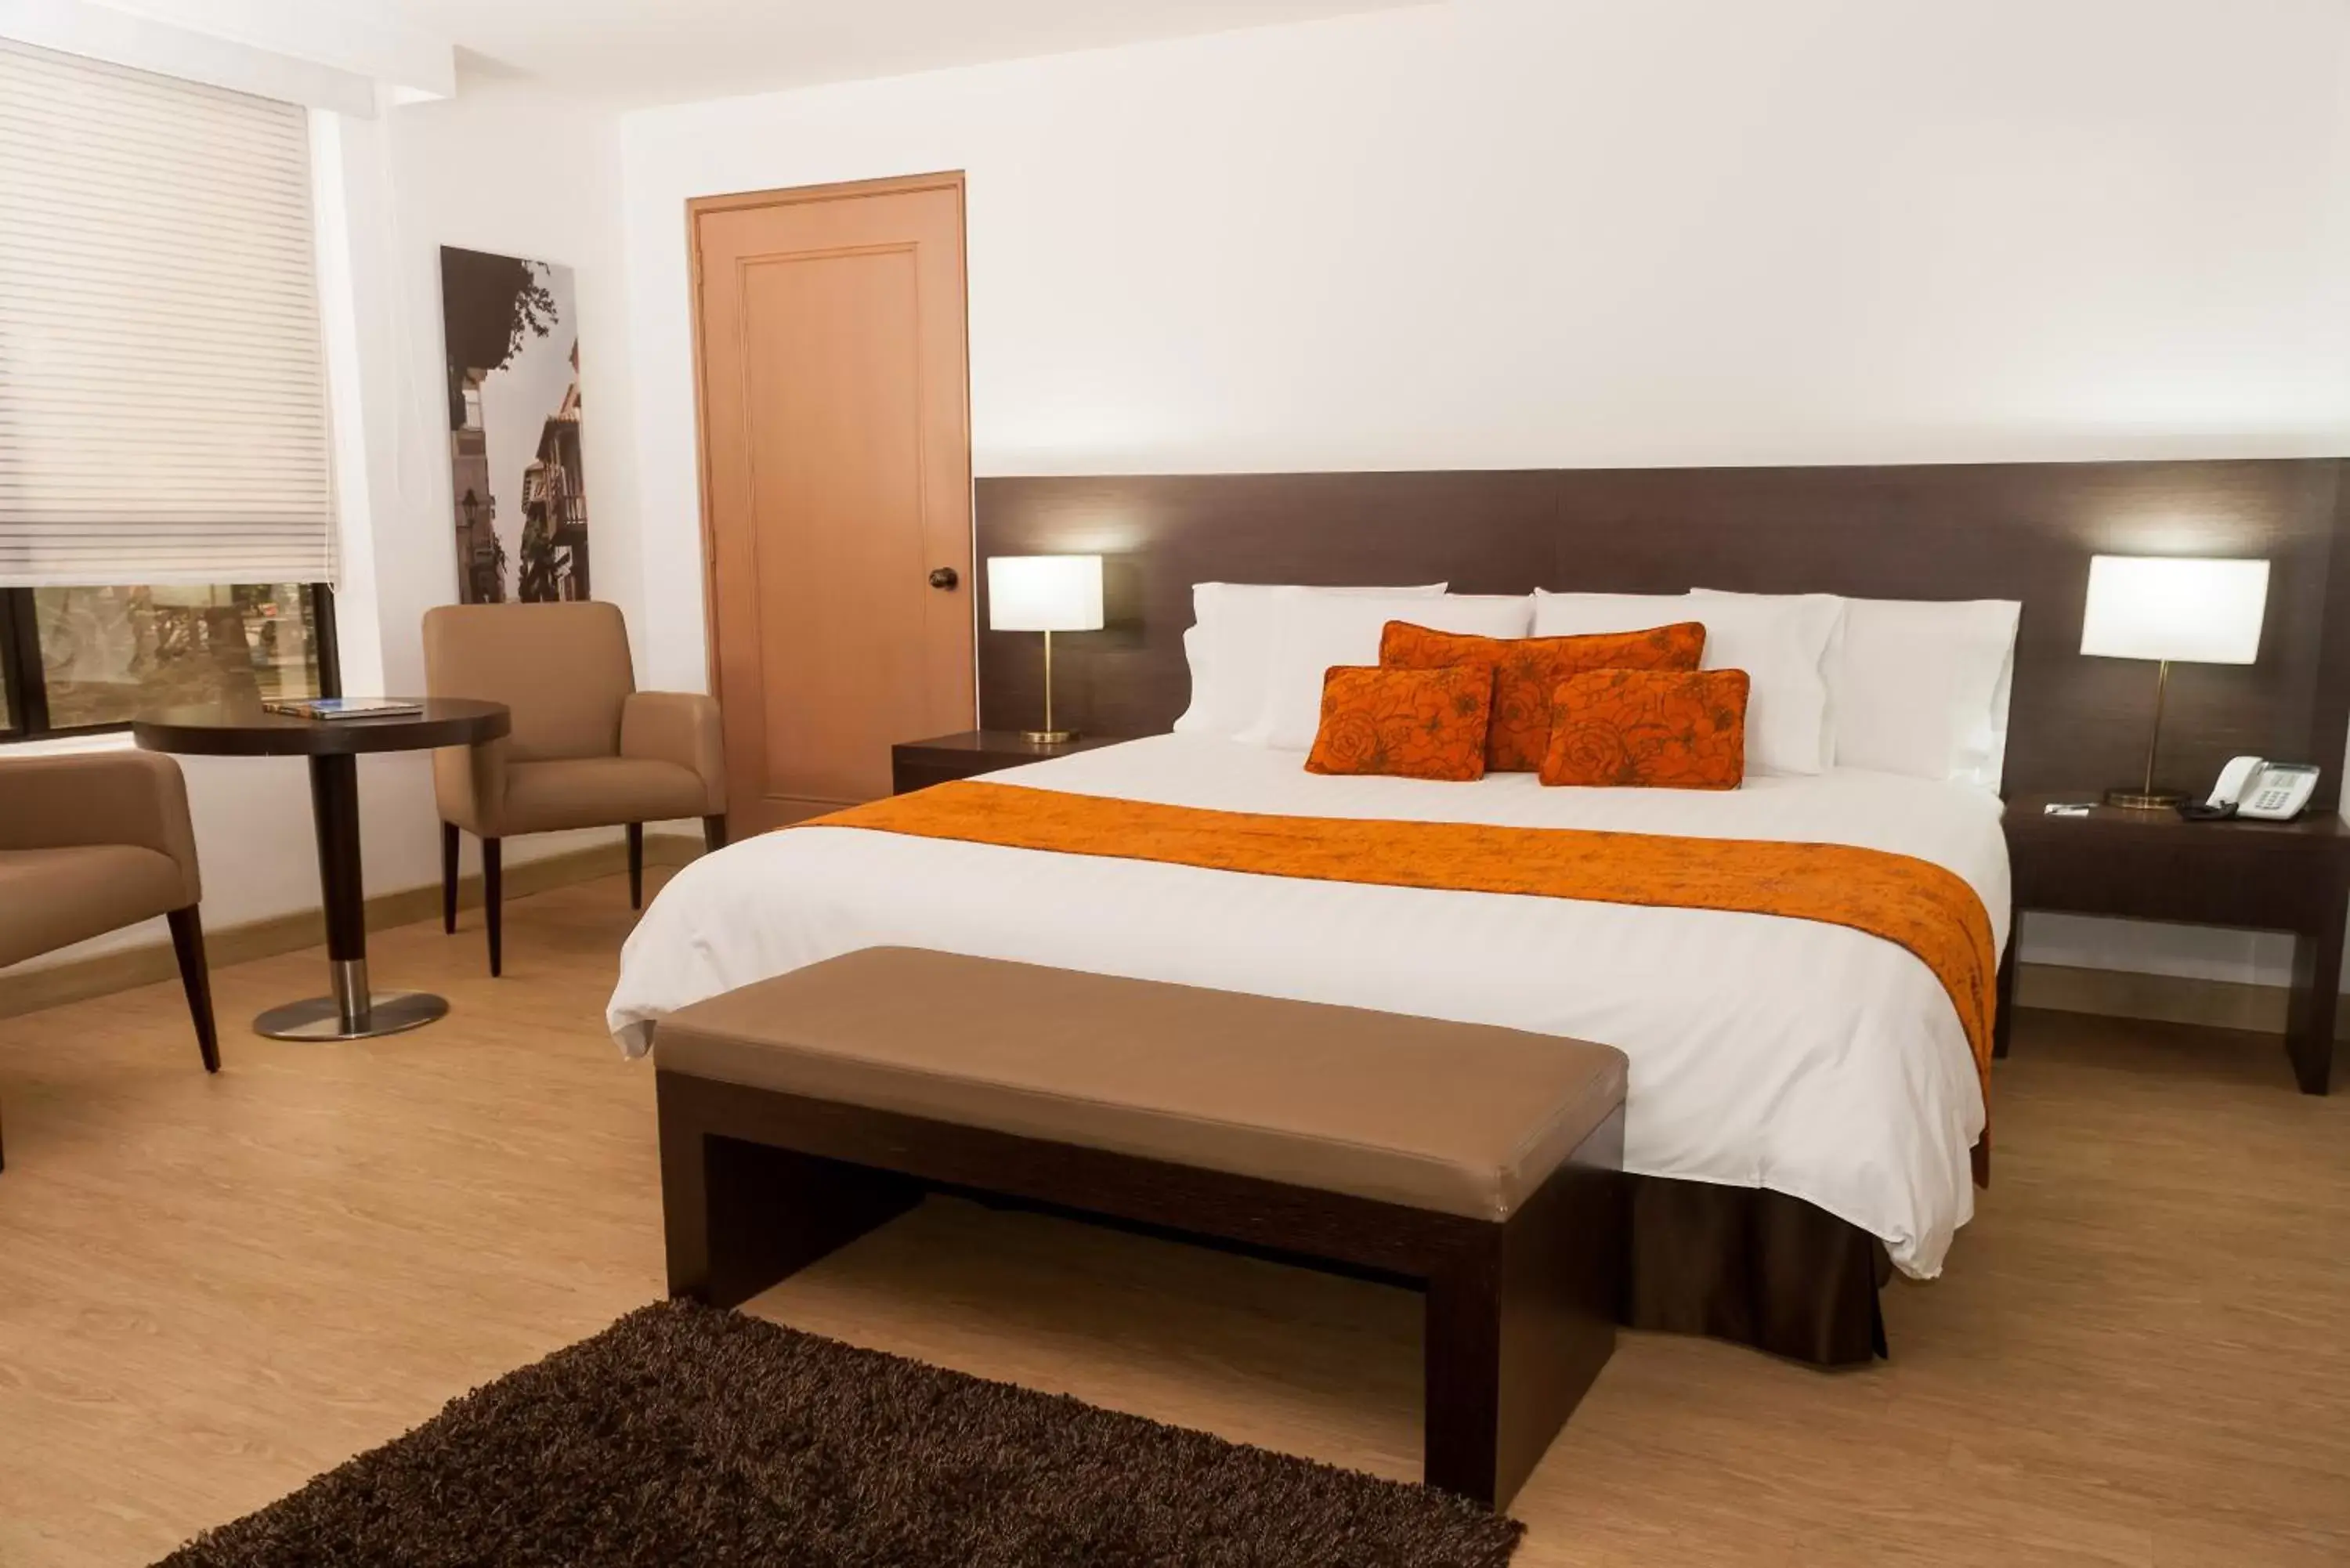 Bedroom, Room Photo in Hotel Parque 97 Suites